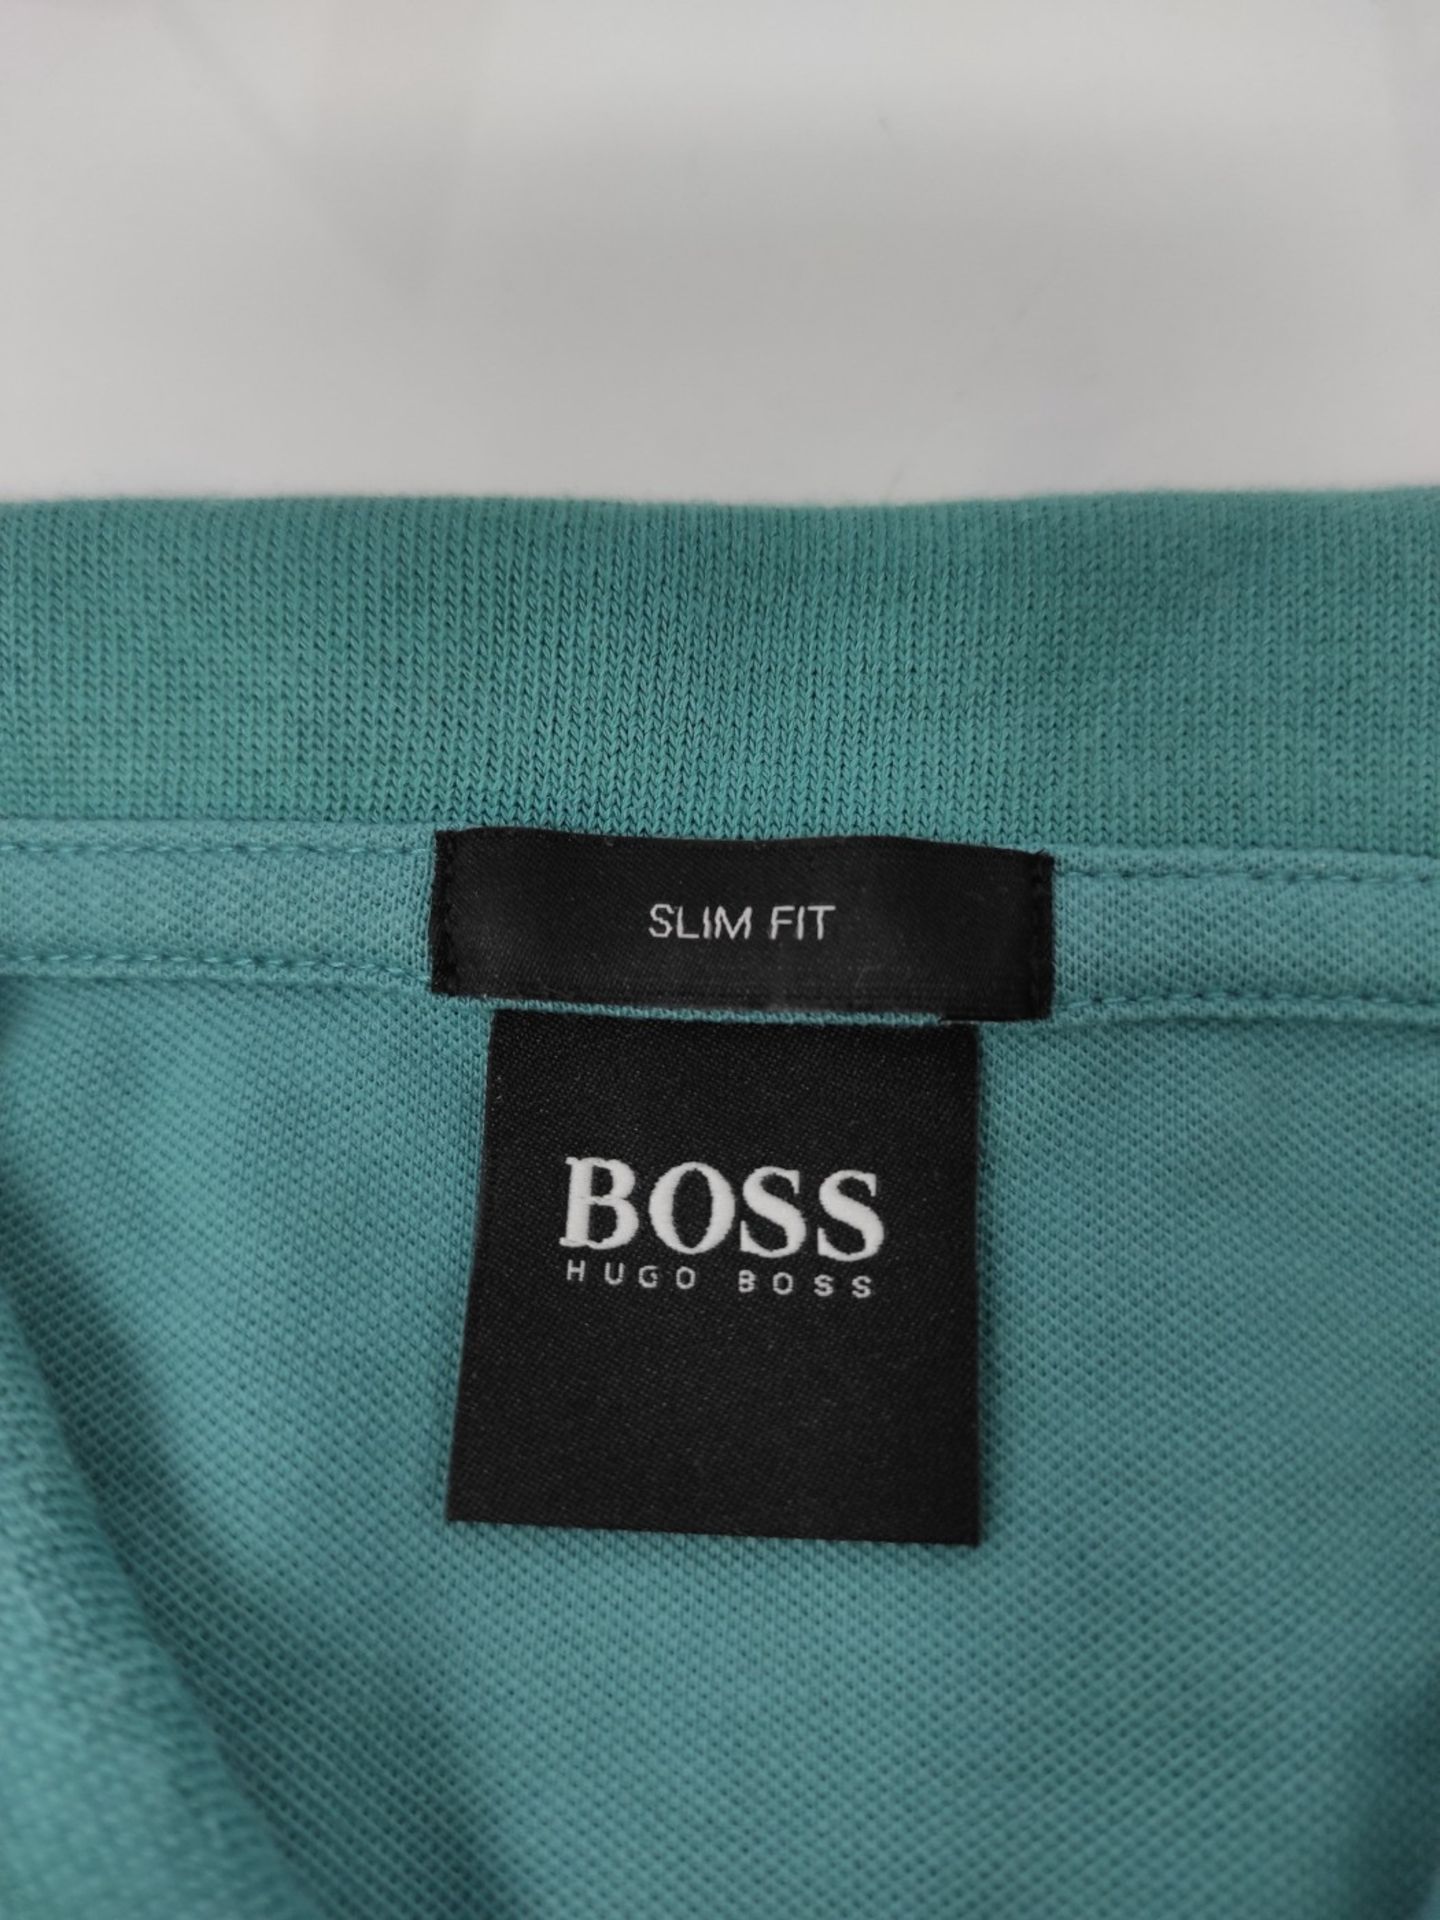 BOSS Men's Paul Curved 10196402 01 Polo Shirt, Turquoise/Aqua447, M - Image 3 of 3